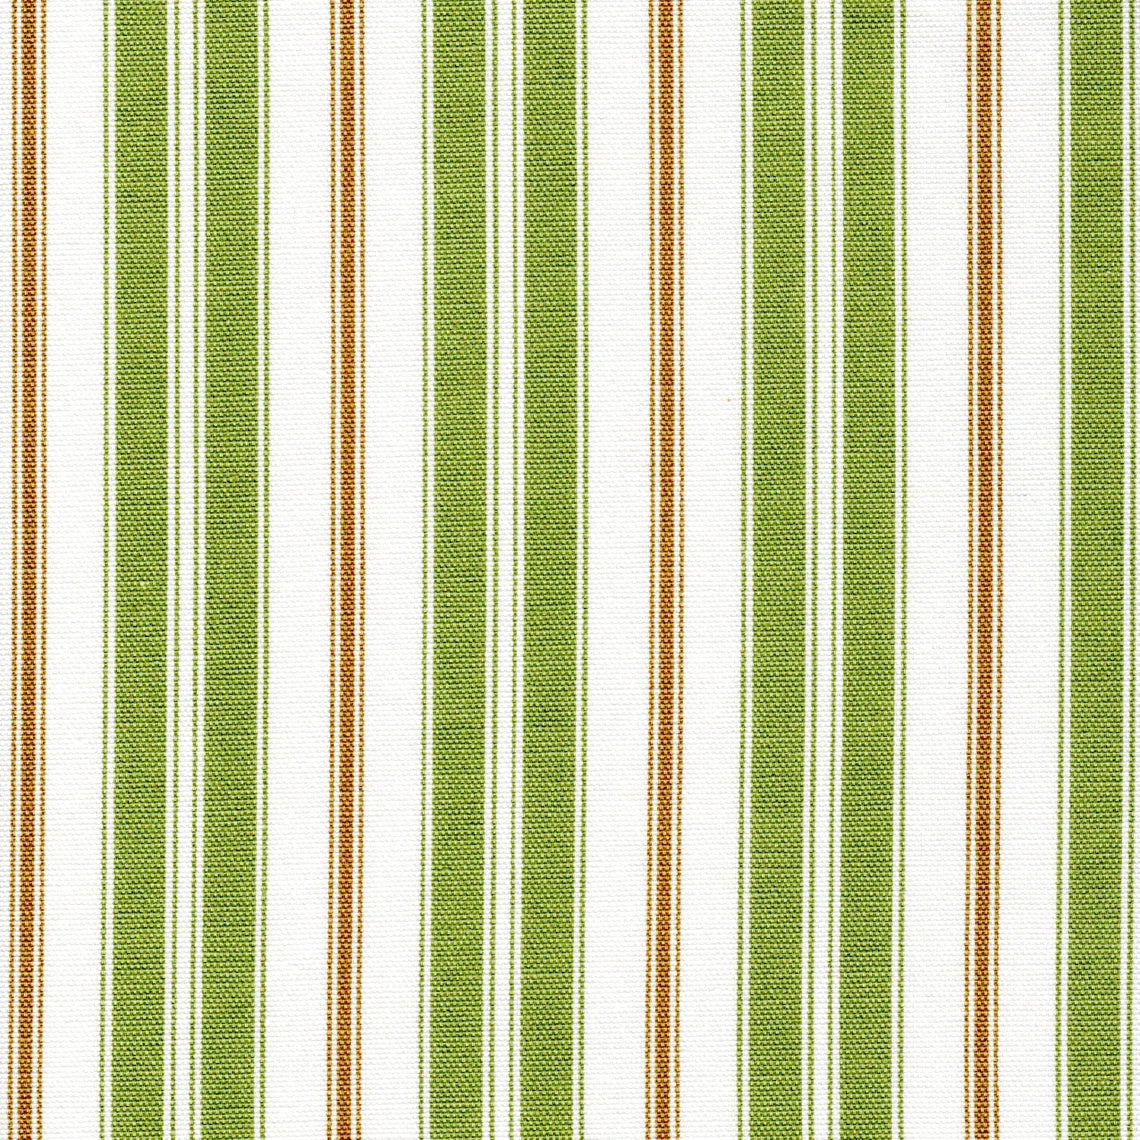 scalloped valance in newbury aloe green stripe- green, brown, white